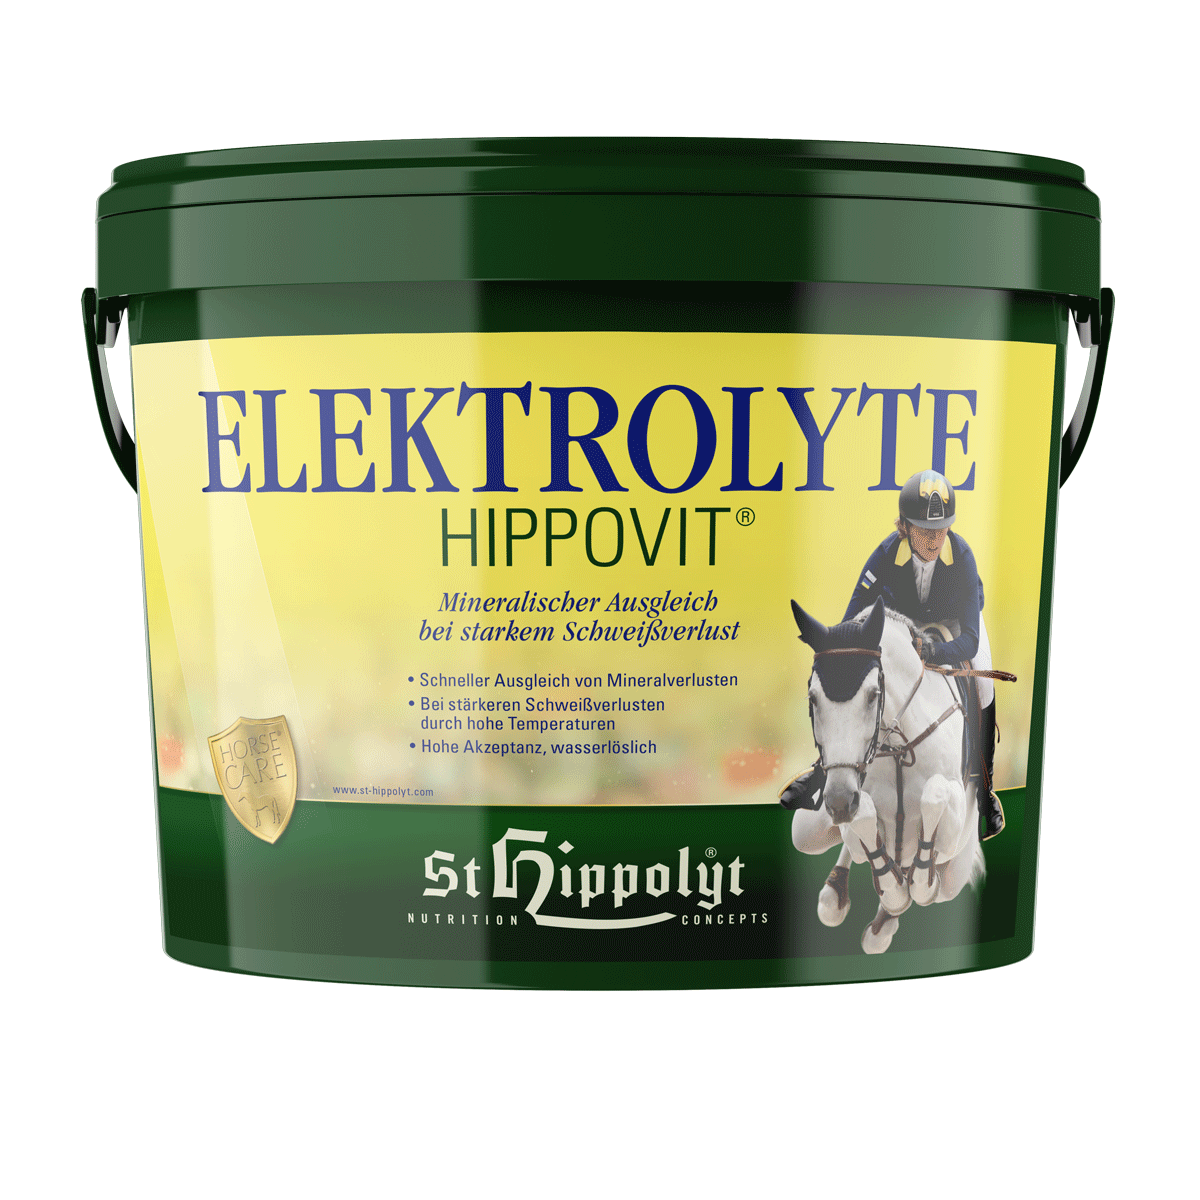 Elektrolyte 2,5 kg